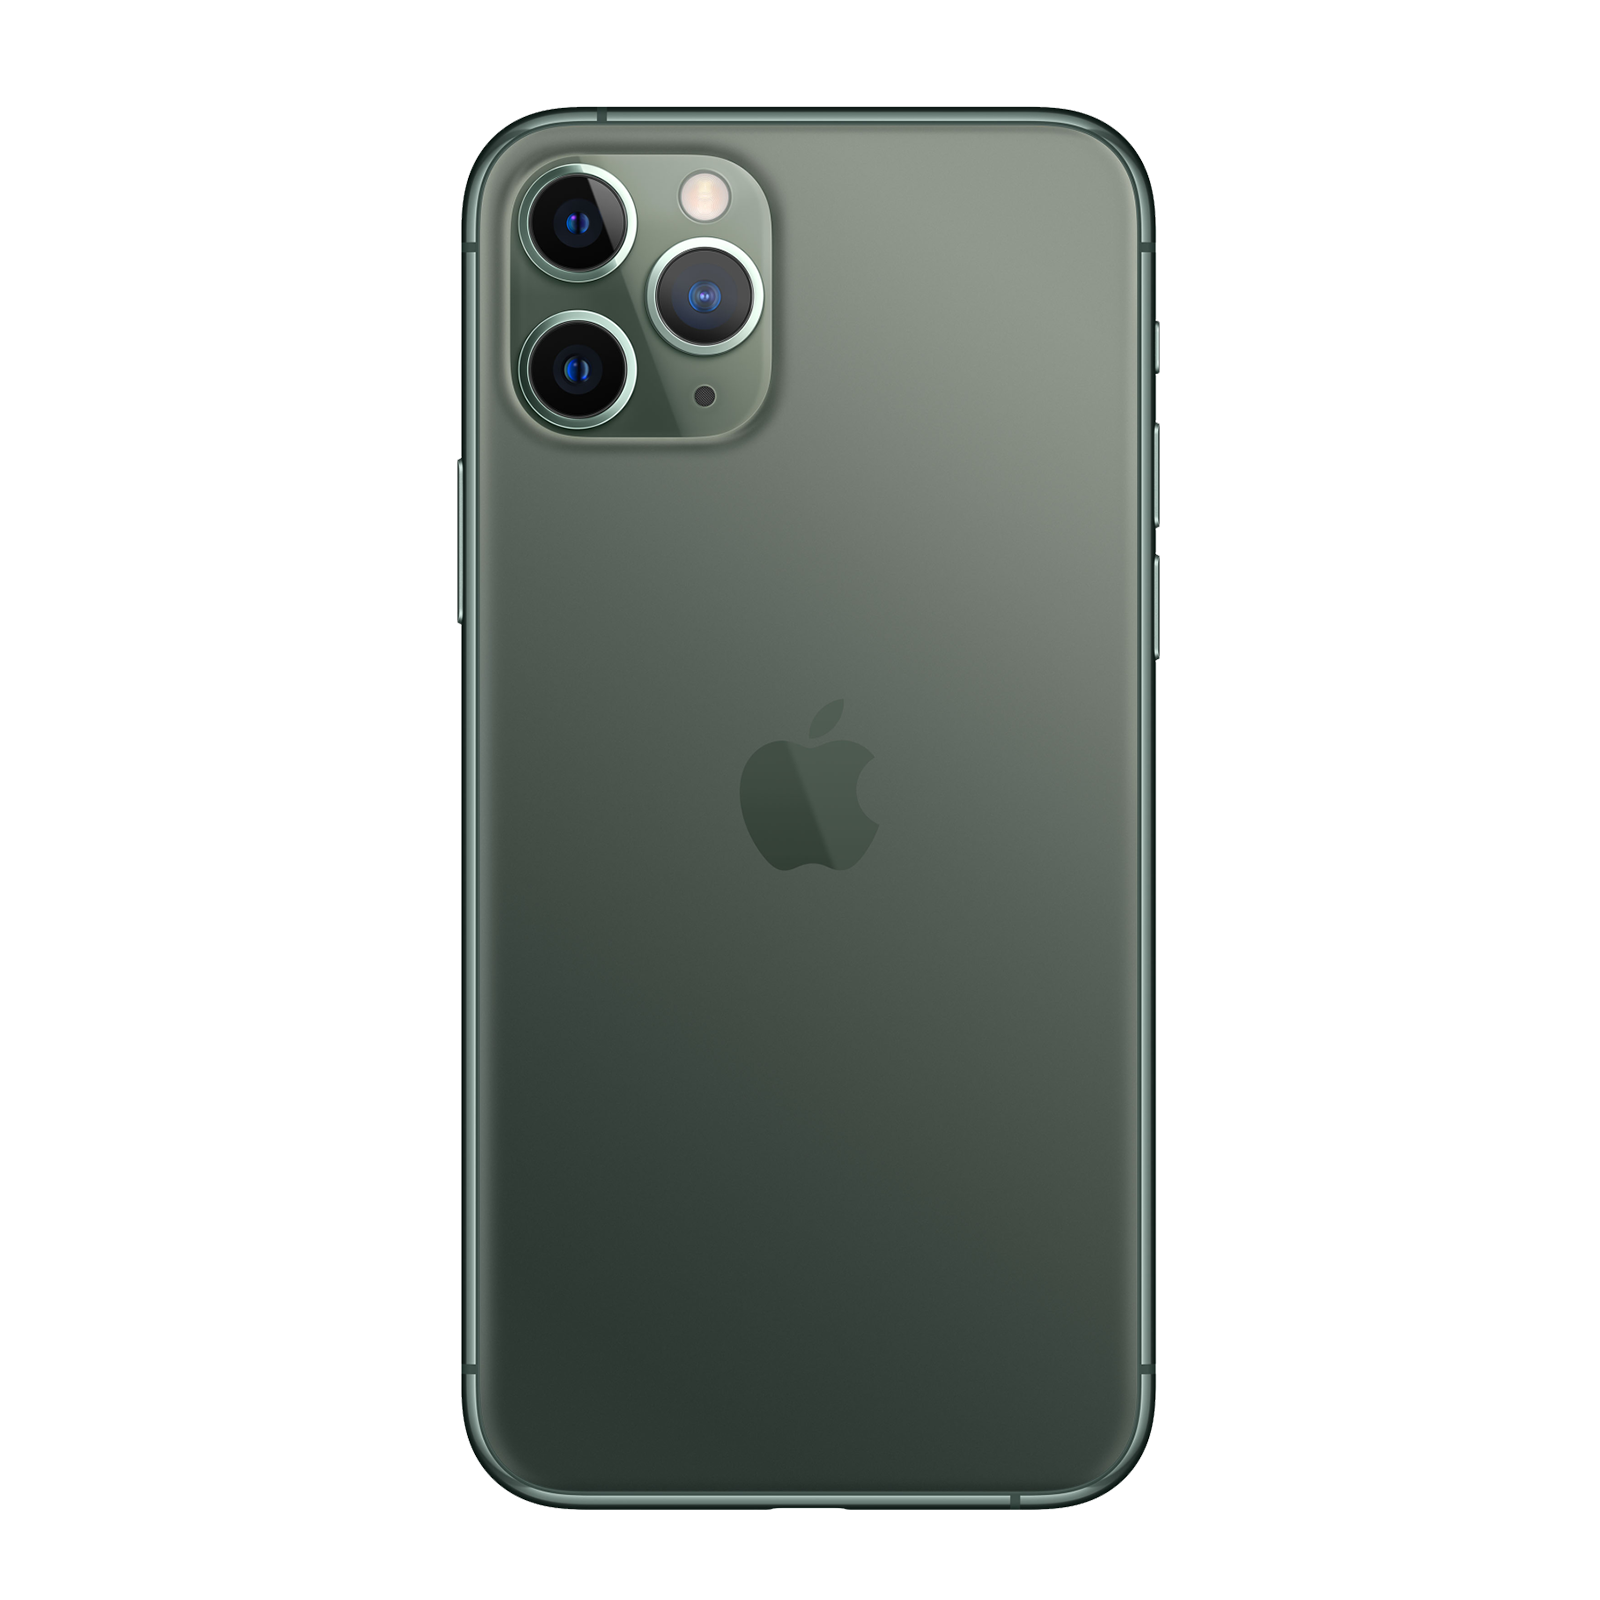 Apple iPhone 11 Pro Max 64GB Midnight Green Very Good - Unlocked